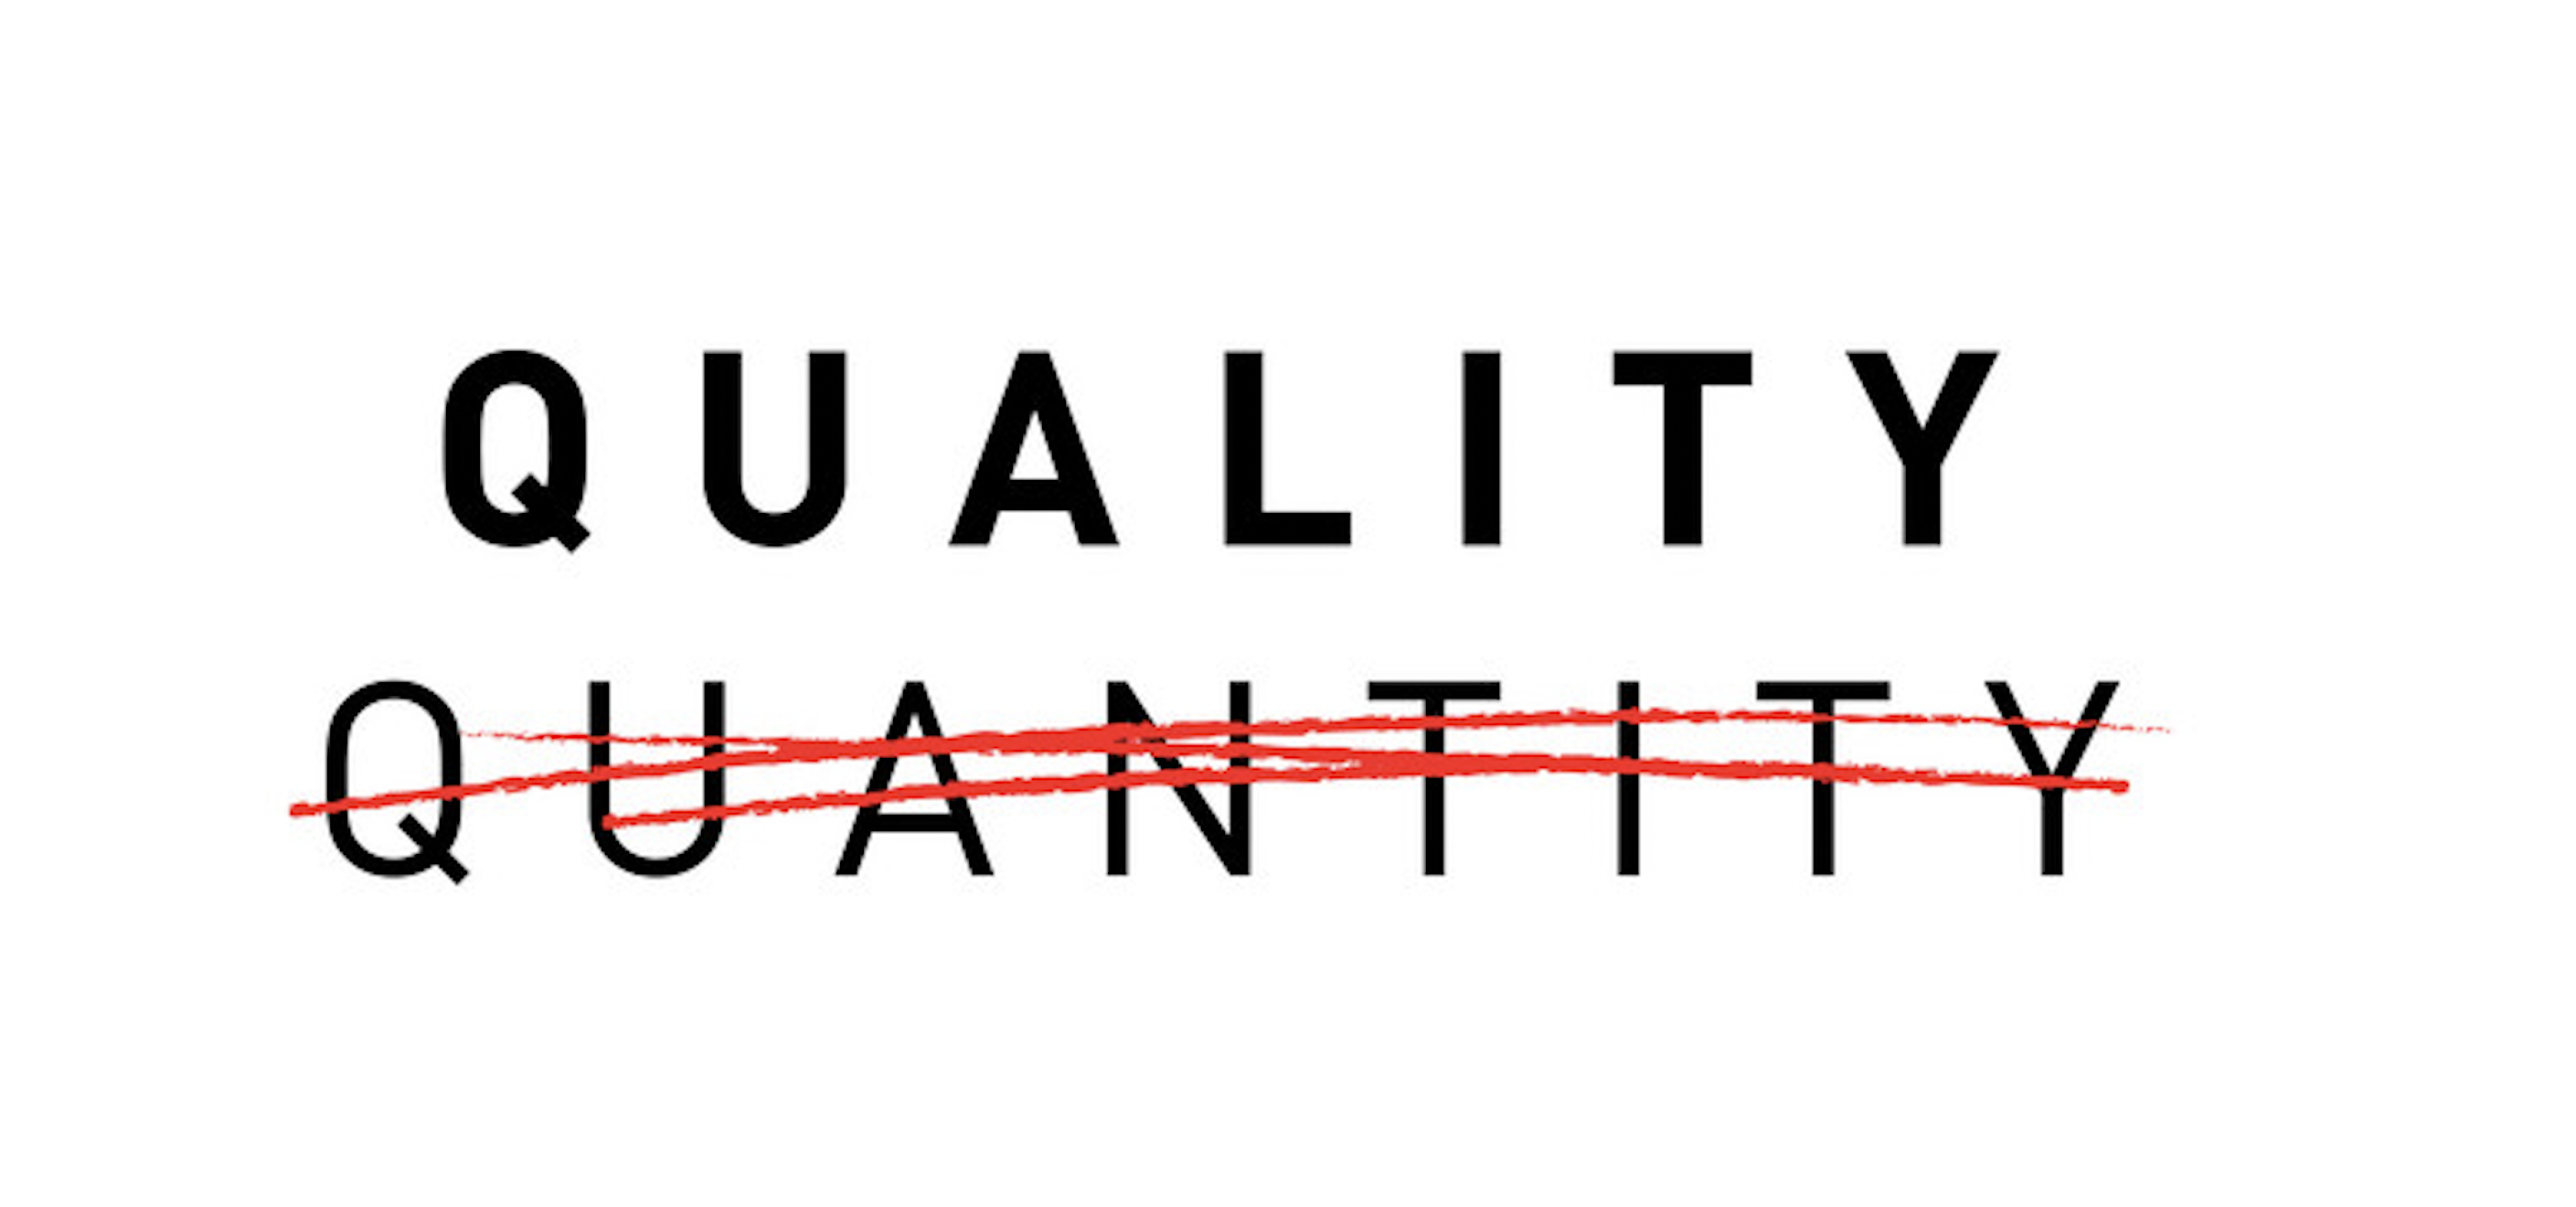 quiality vs quantity